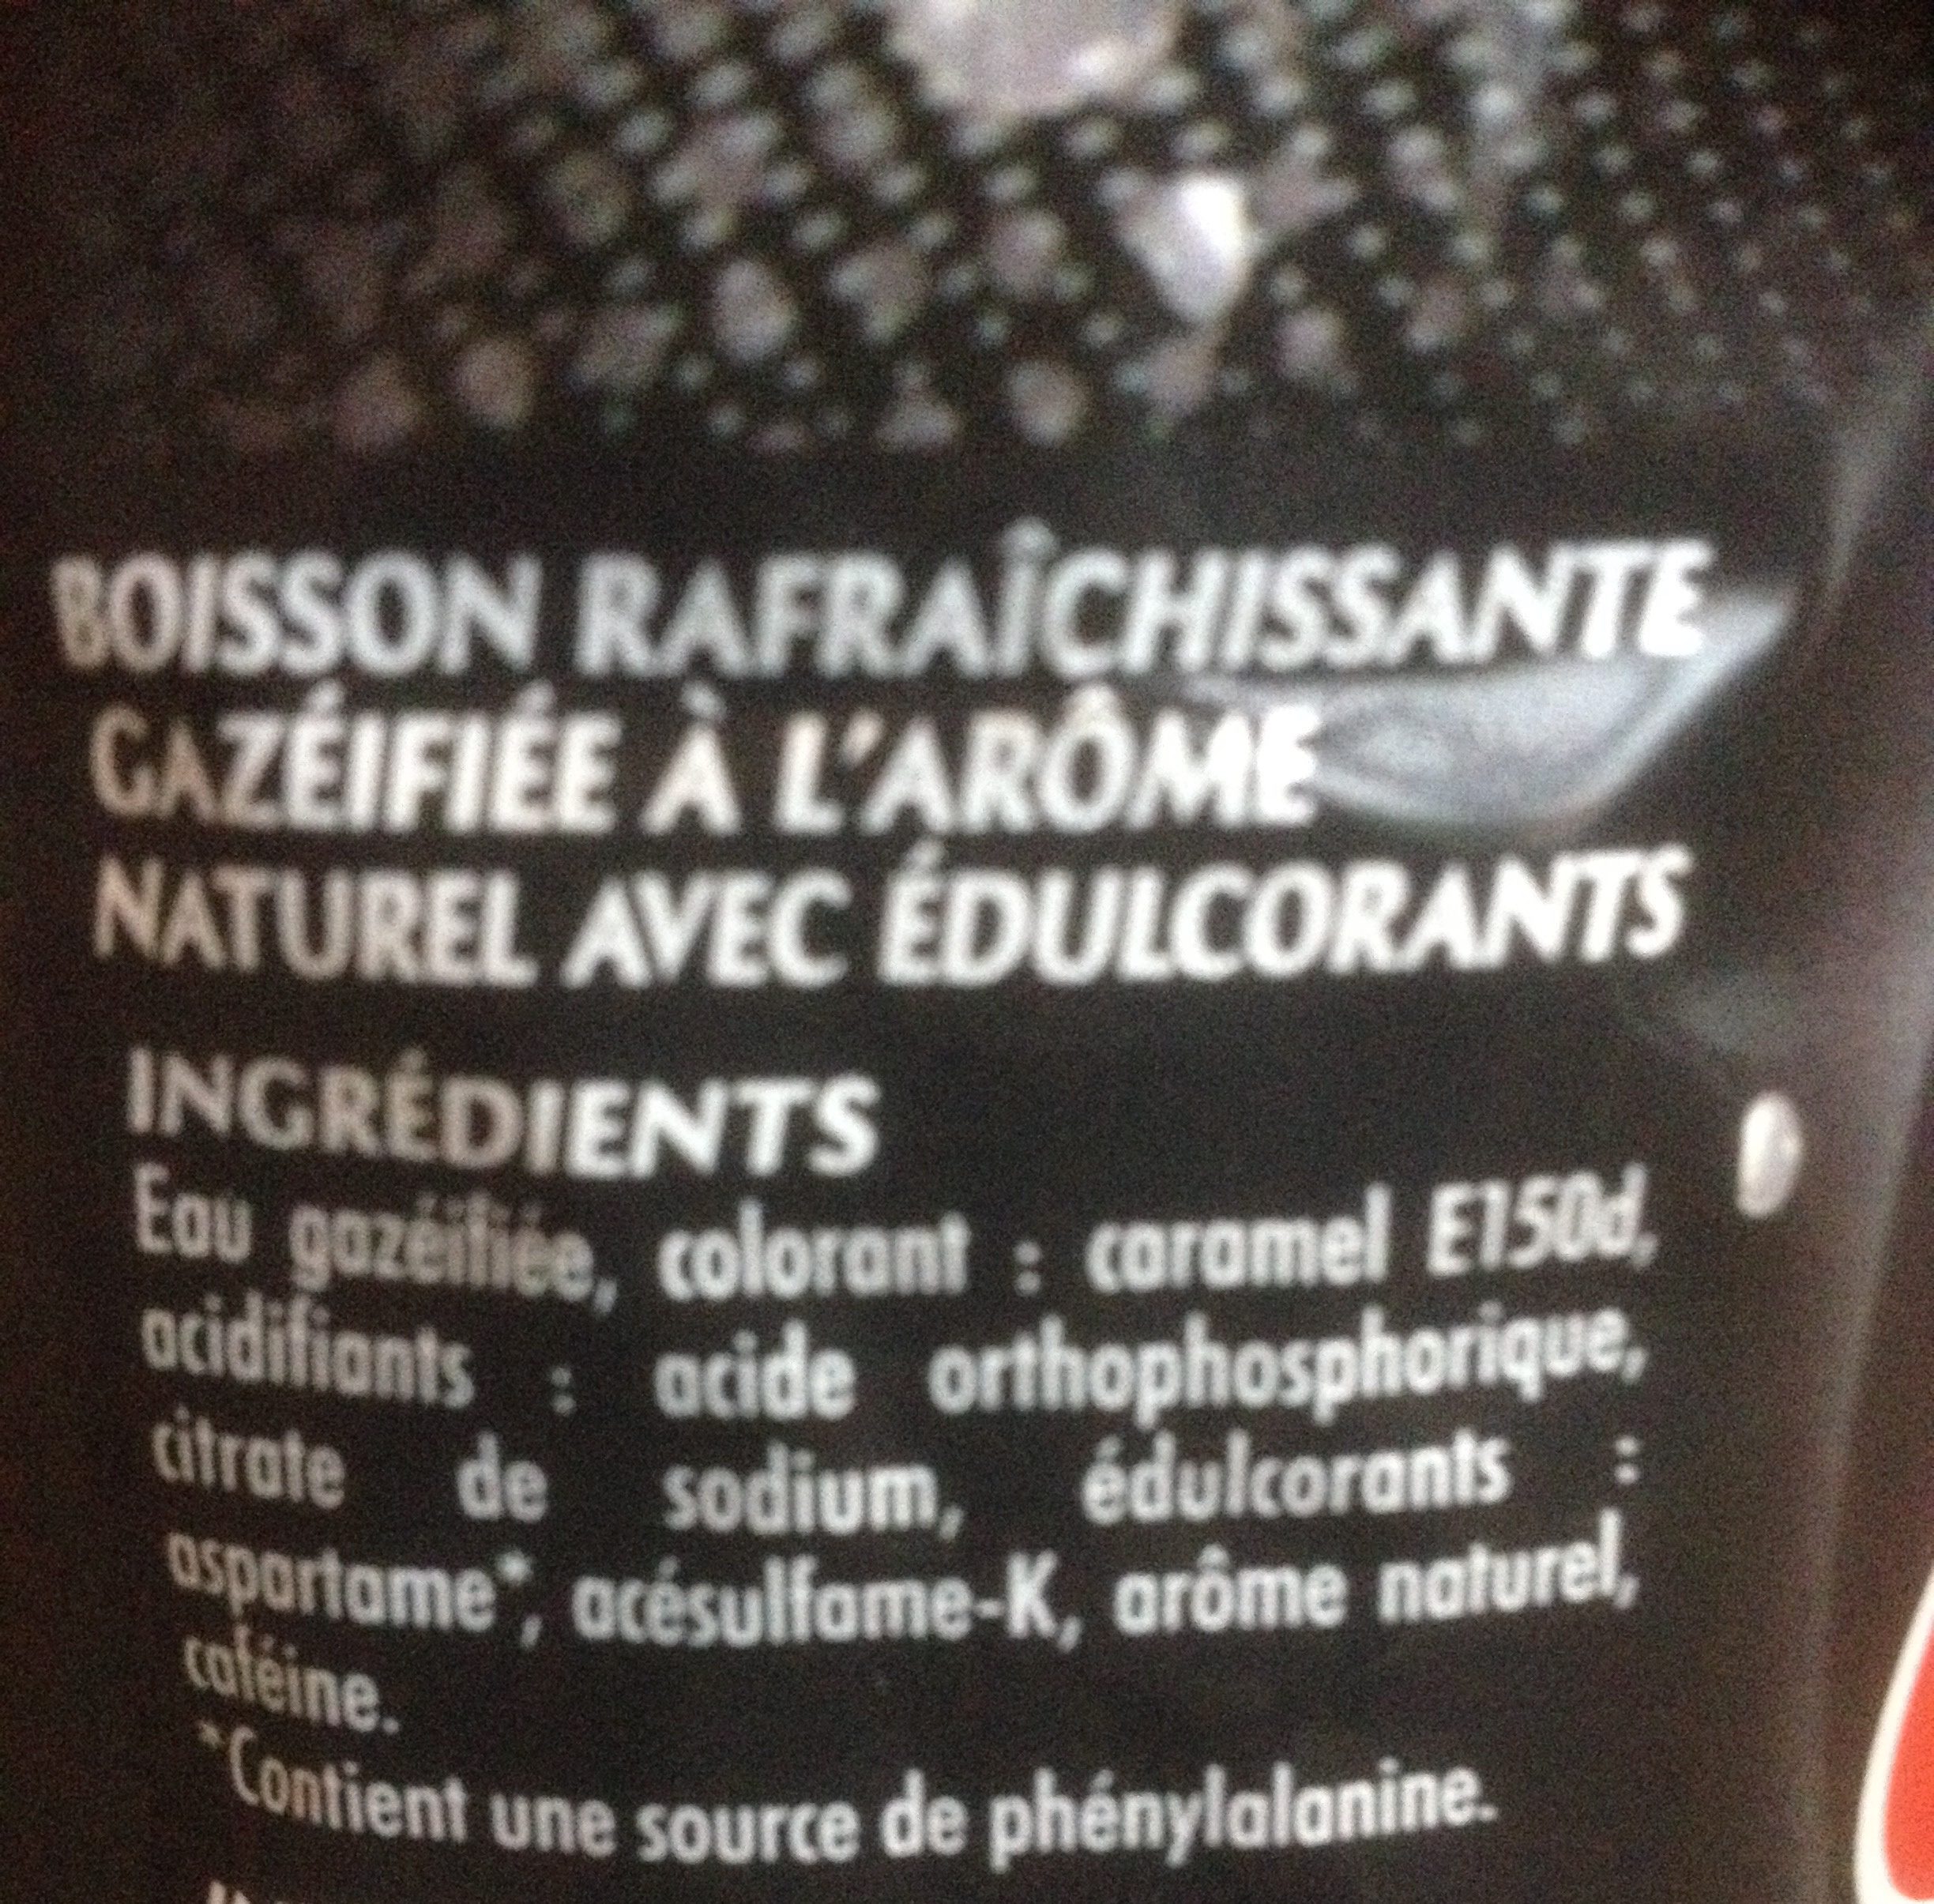 Cola zéro ** - Ingredients - fr